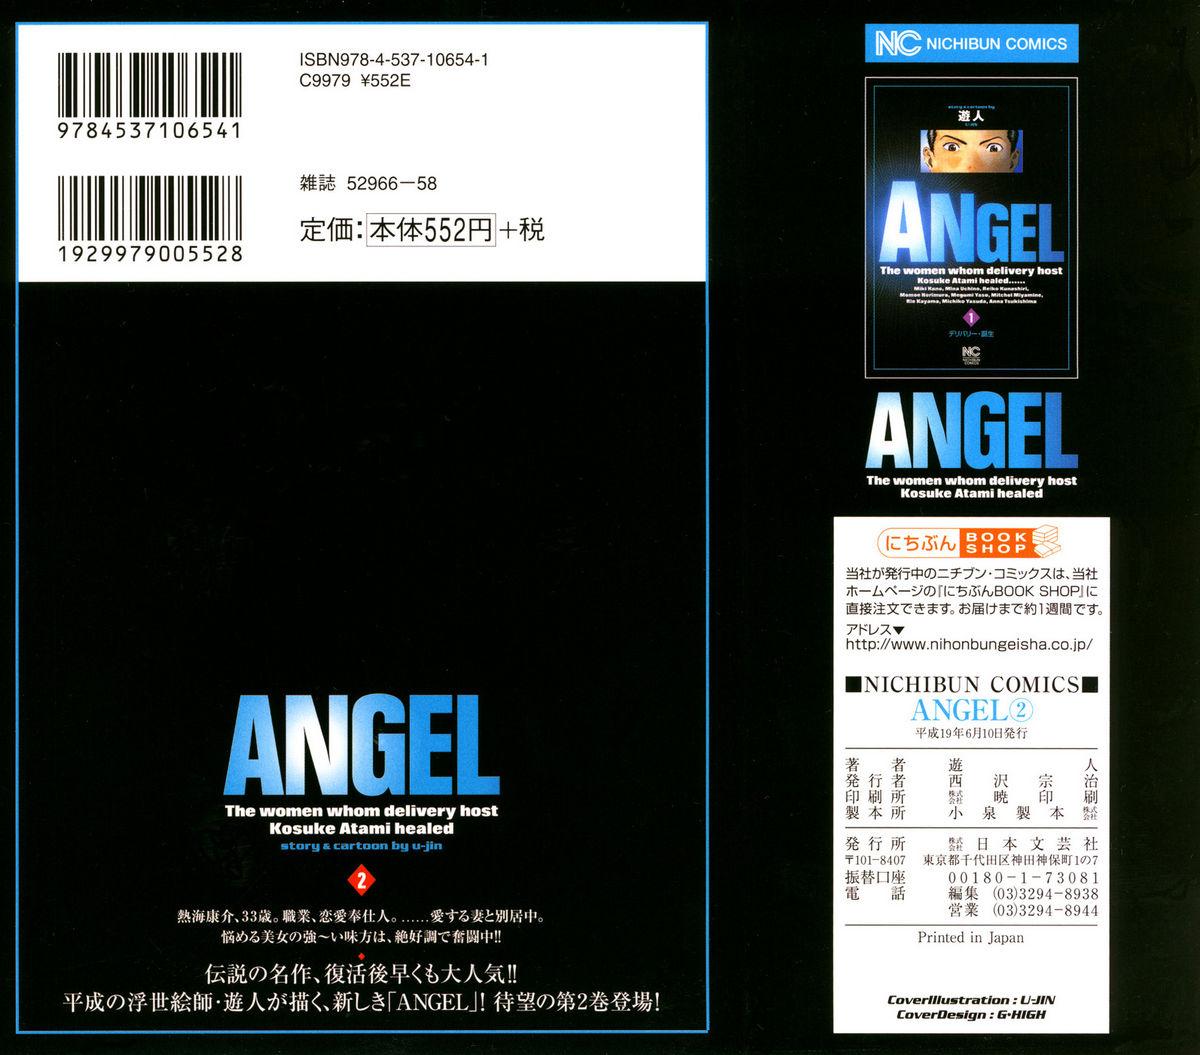 Angel - The Women Whom Delivery Host Kosuke Atami Healed Vol.02 2